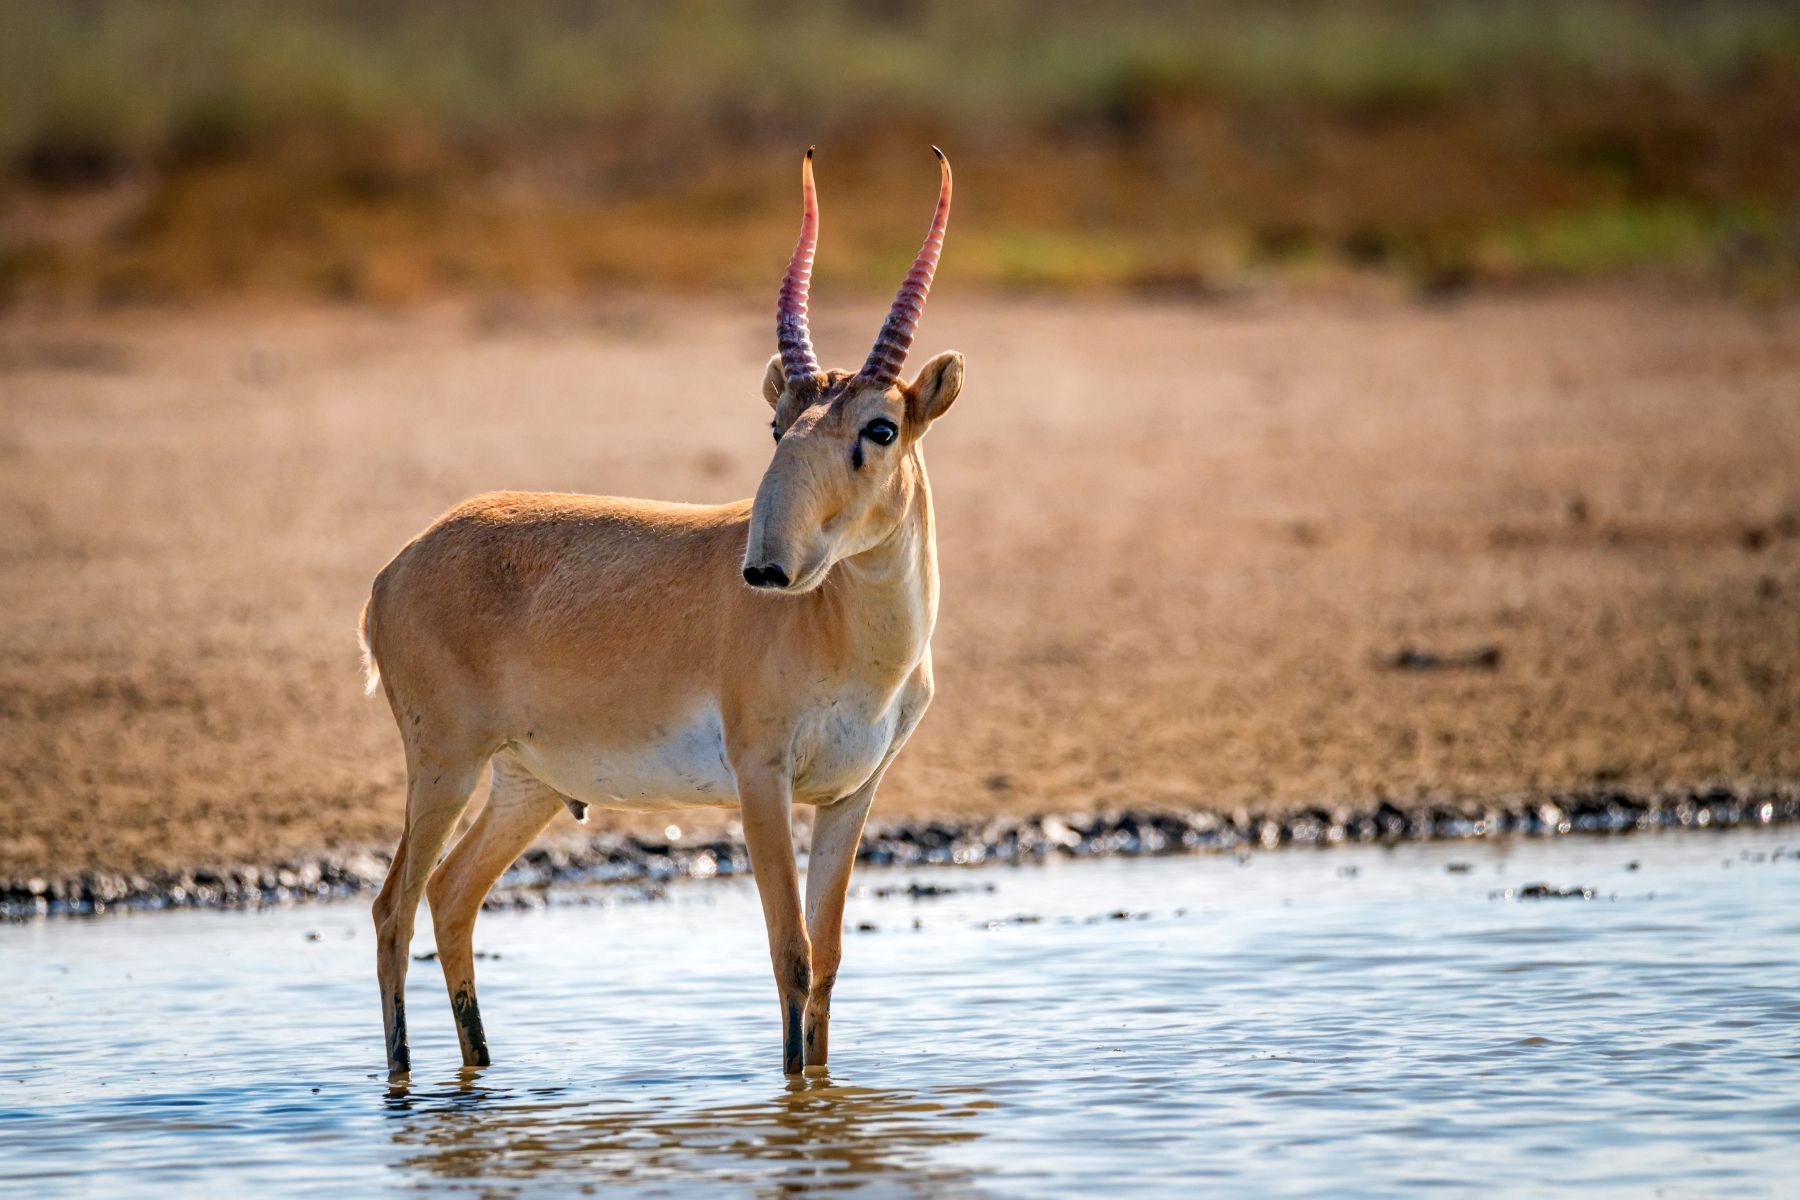 A Saiga antelope, wading in shallow water